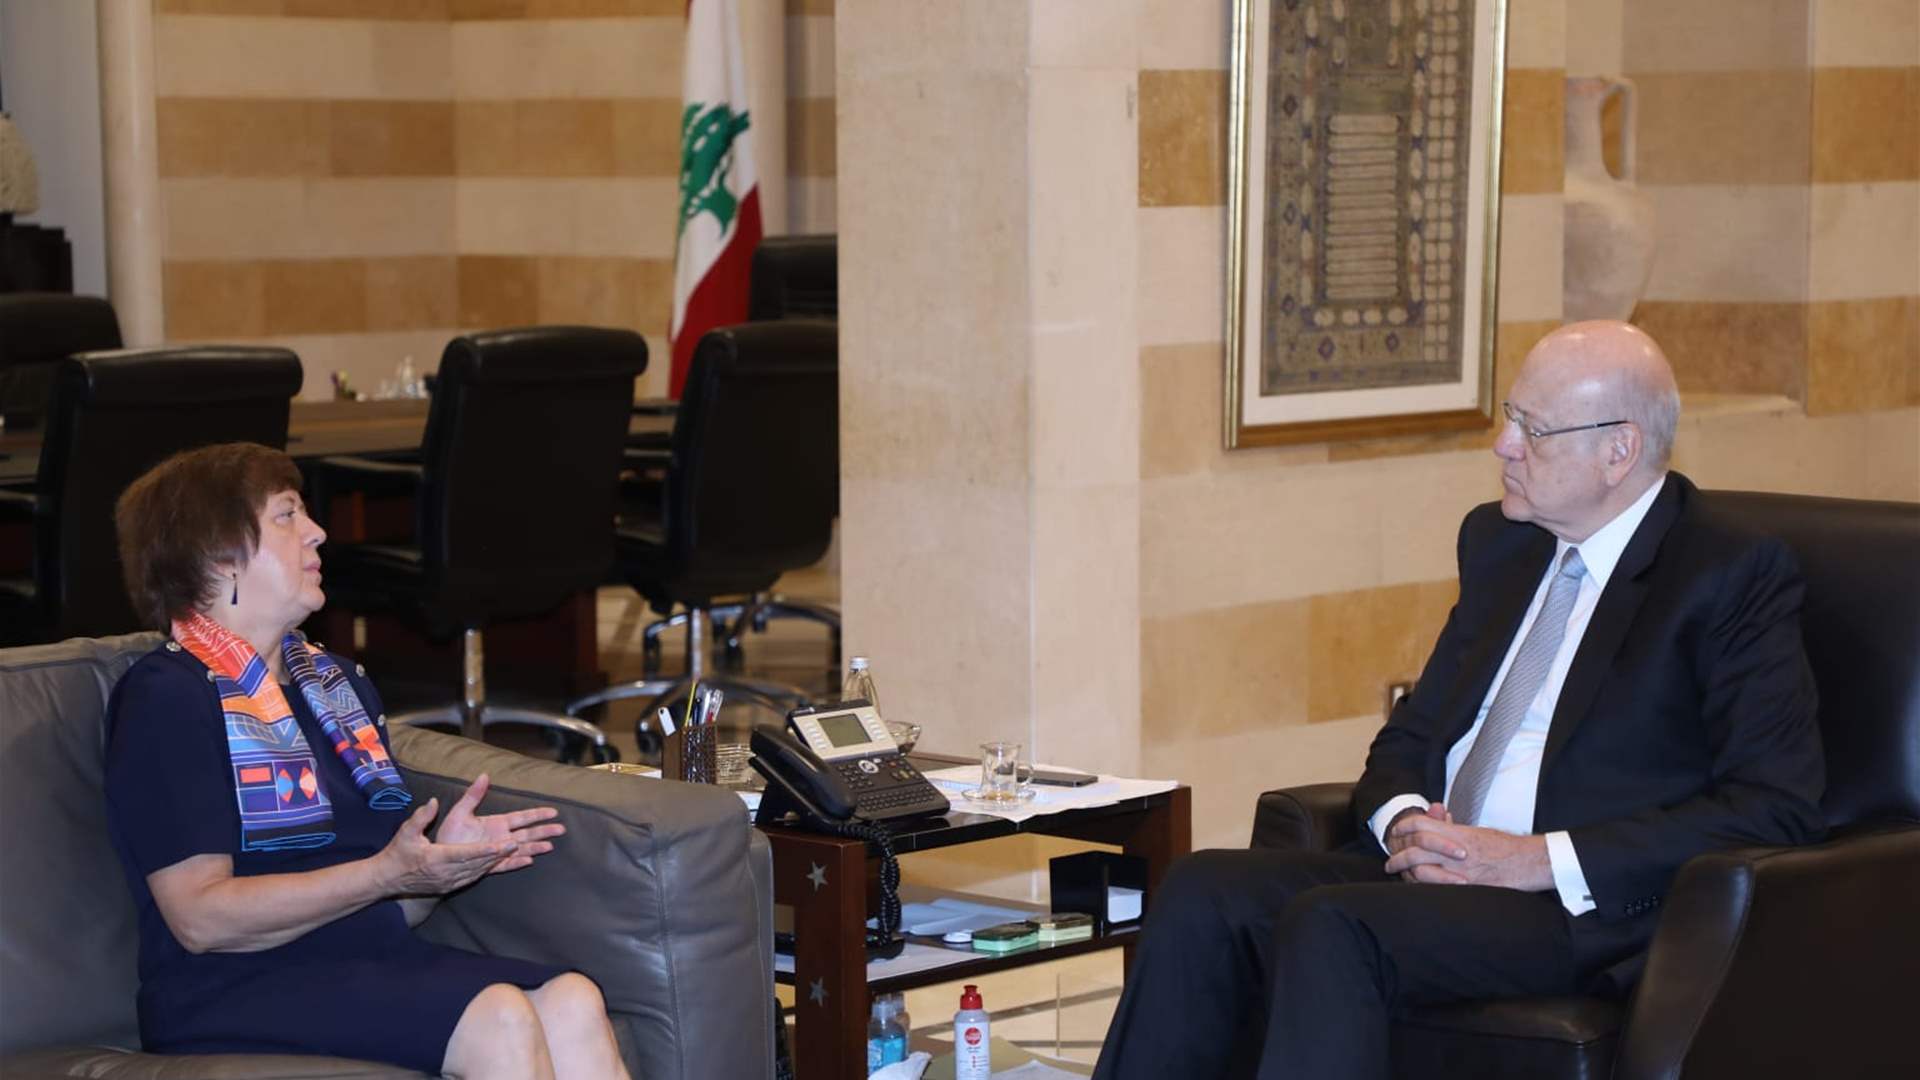 Building a stronger Lebanon: UN Coordinator affirms support for political reforms